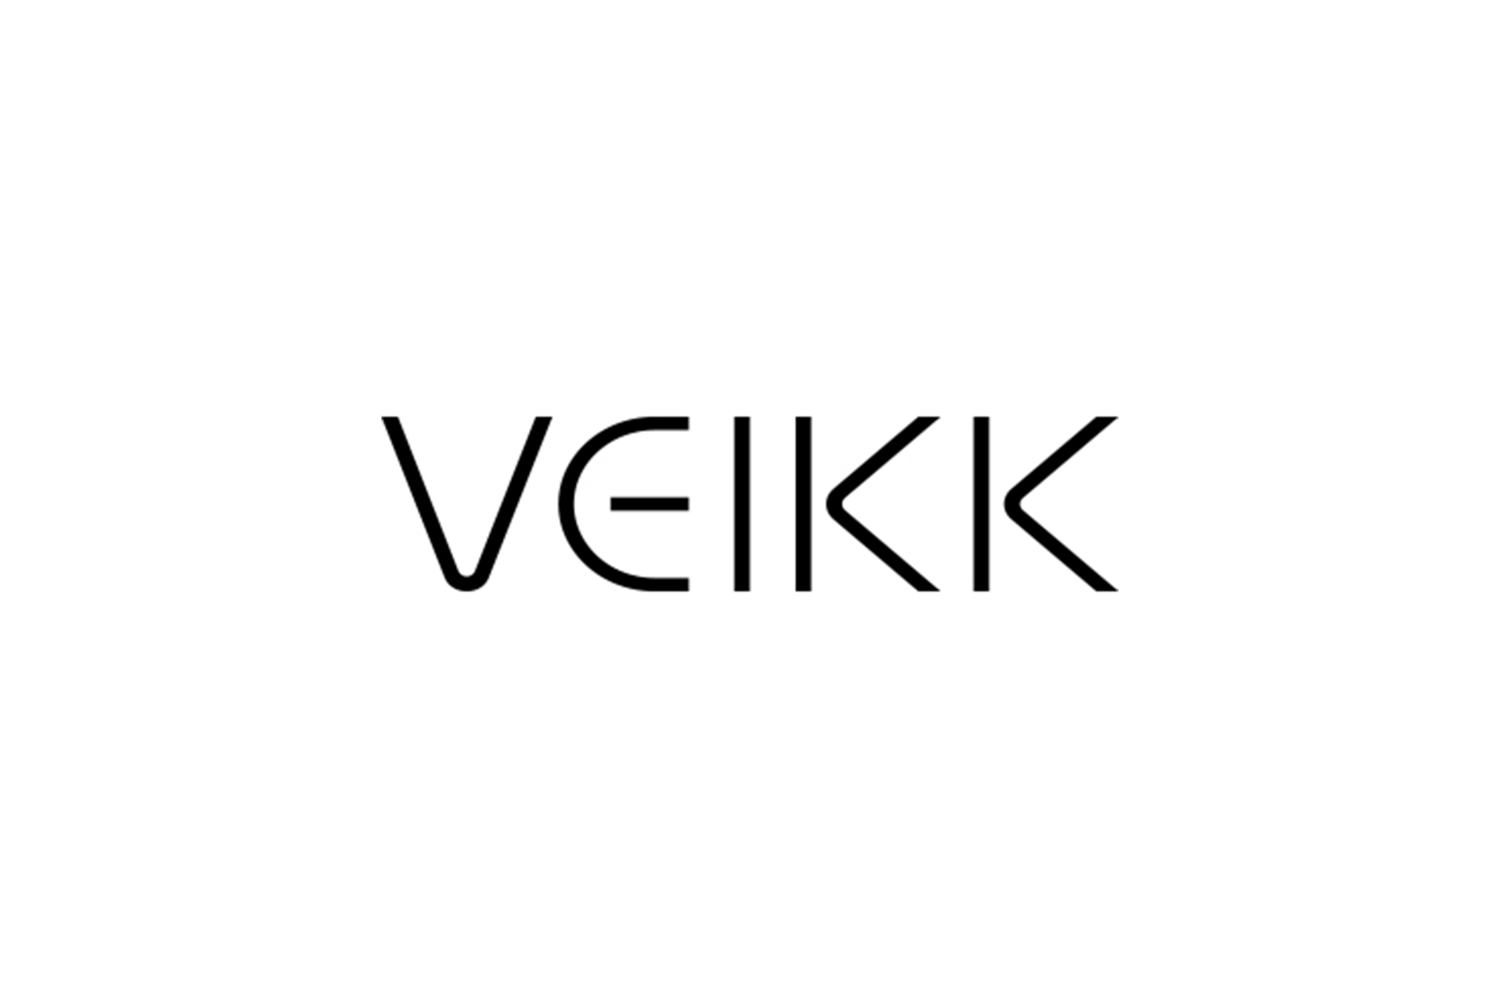 Veikk Veikk_logos_2.png